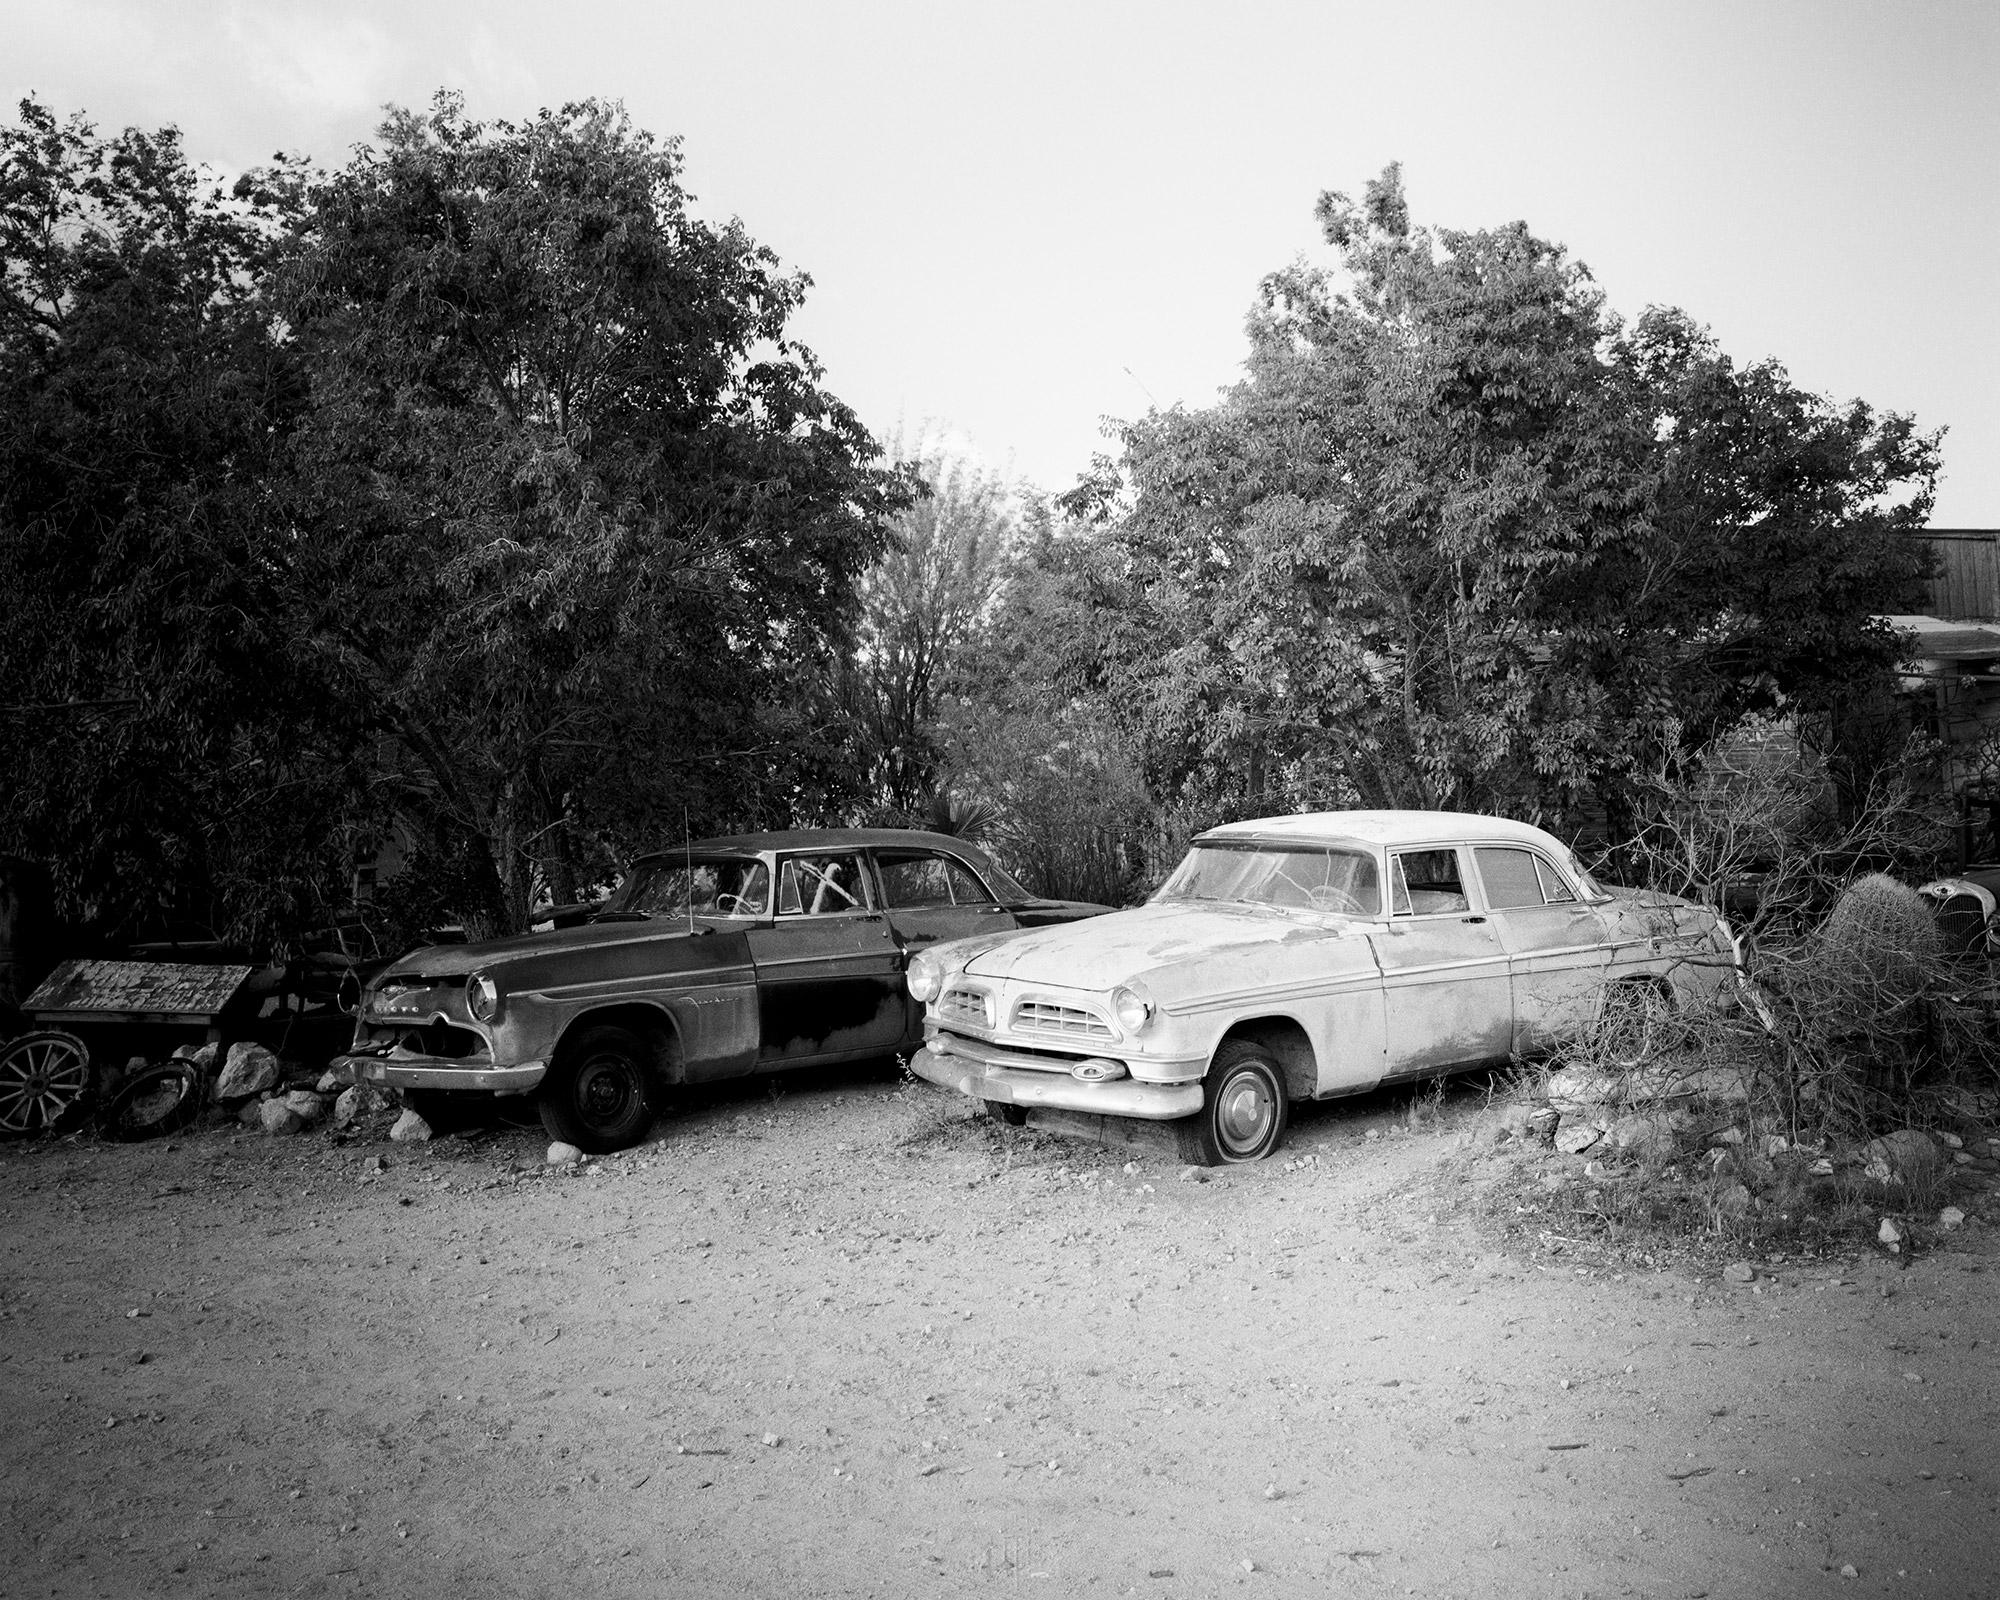 Abandoned Cars, junkyard, California, USA, black and white landscape photography